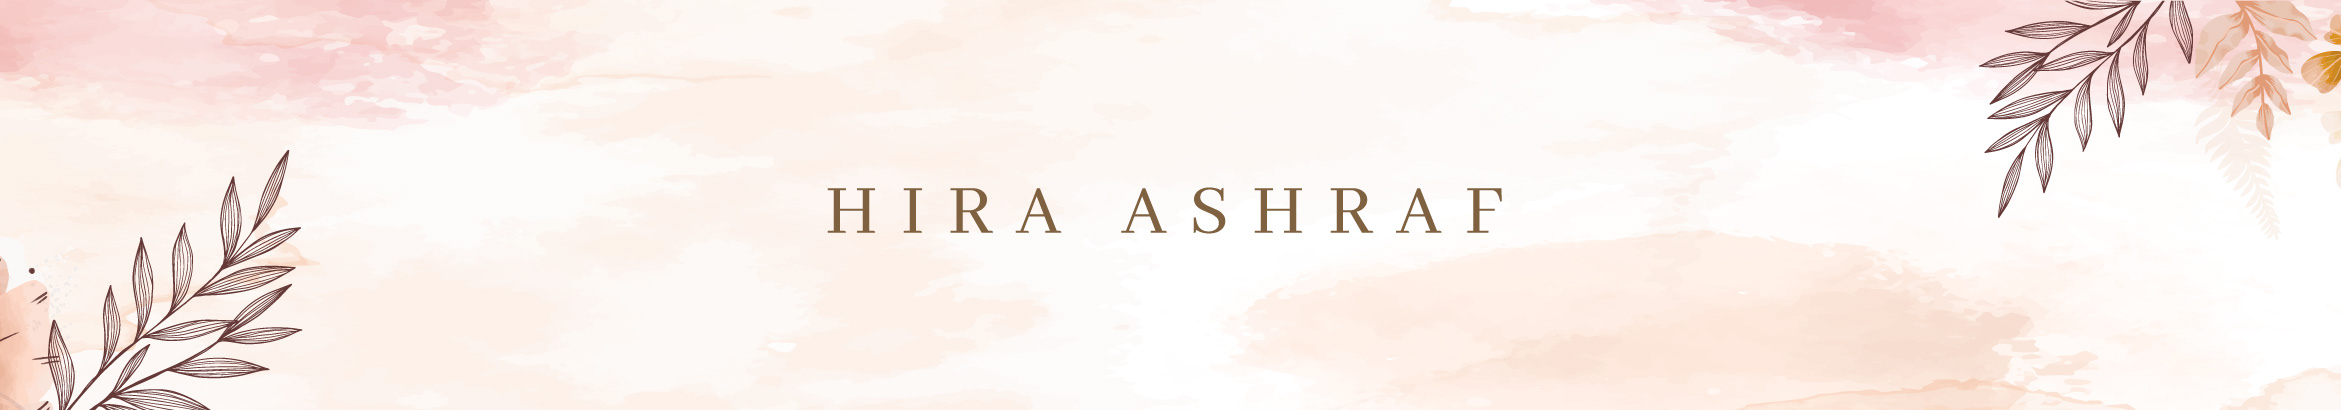 Hira Ashraf profil başlığı